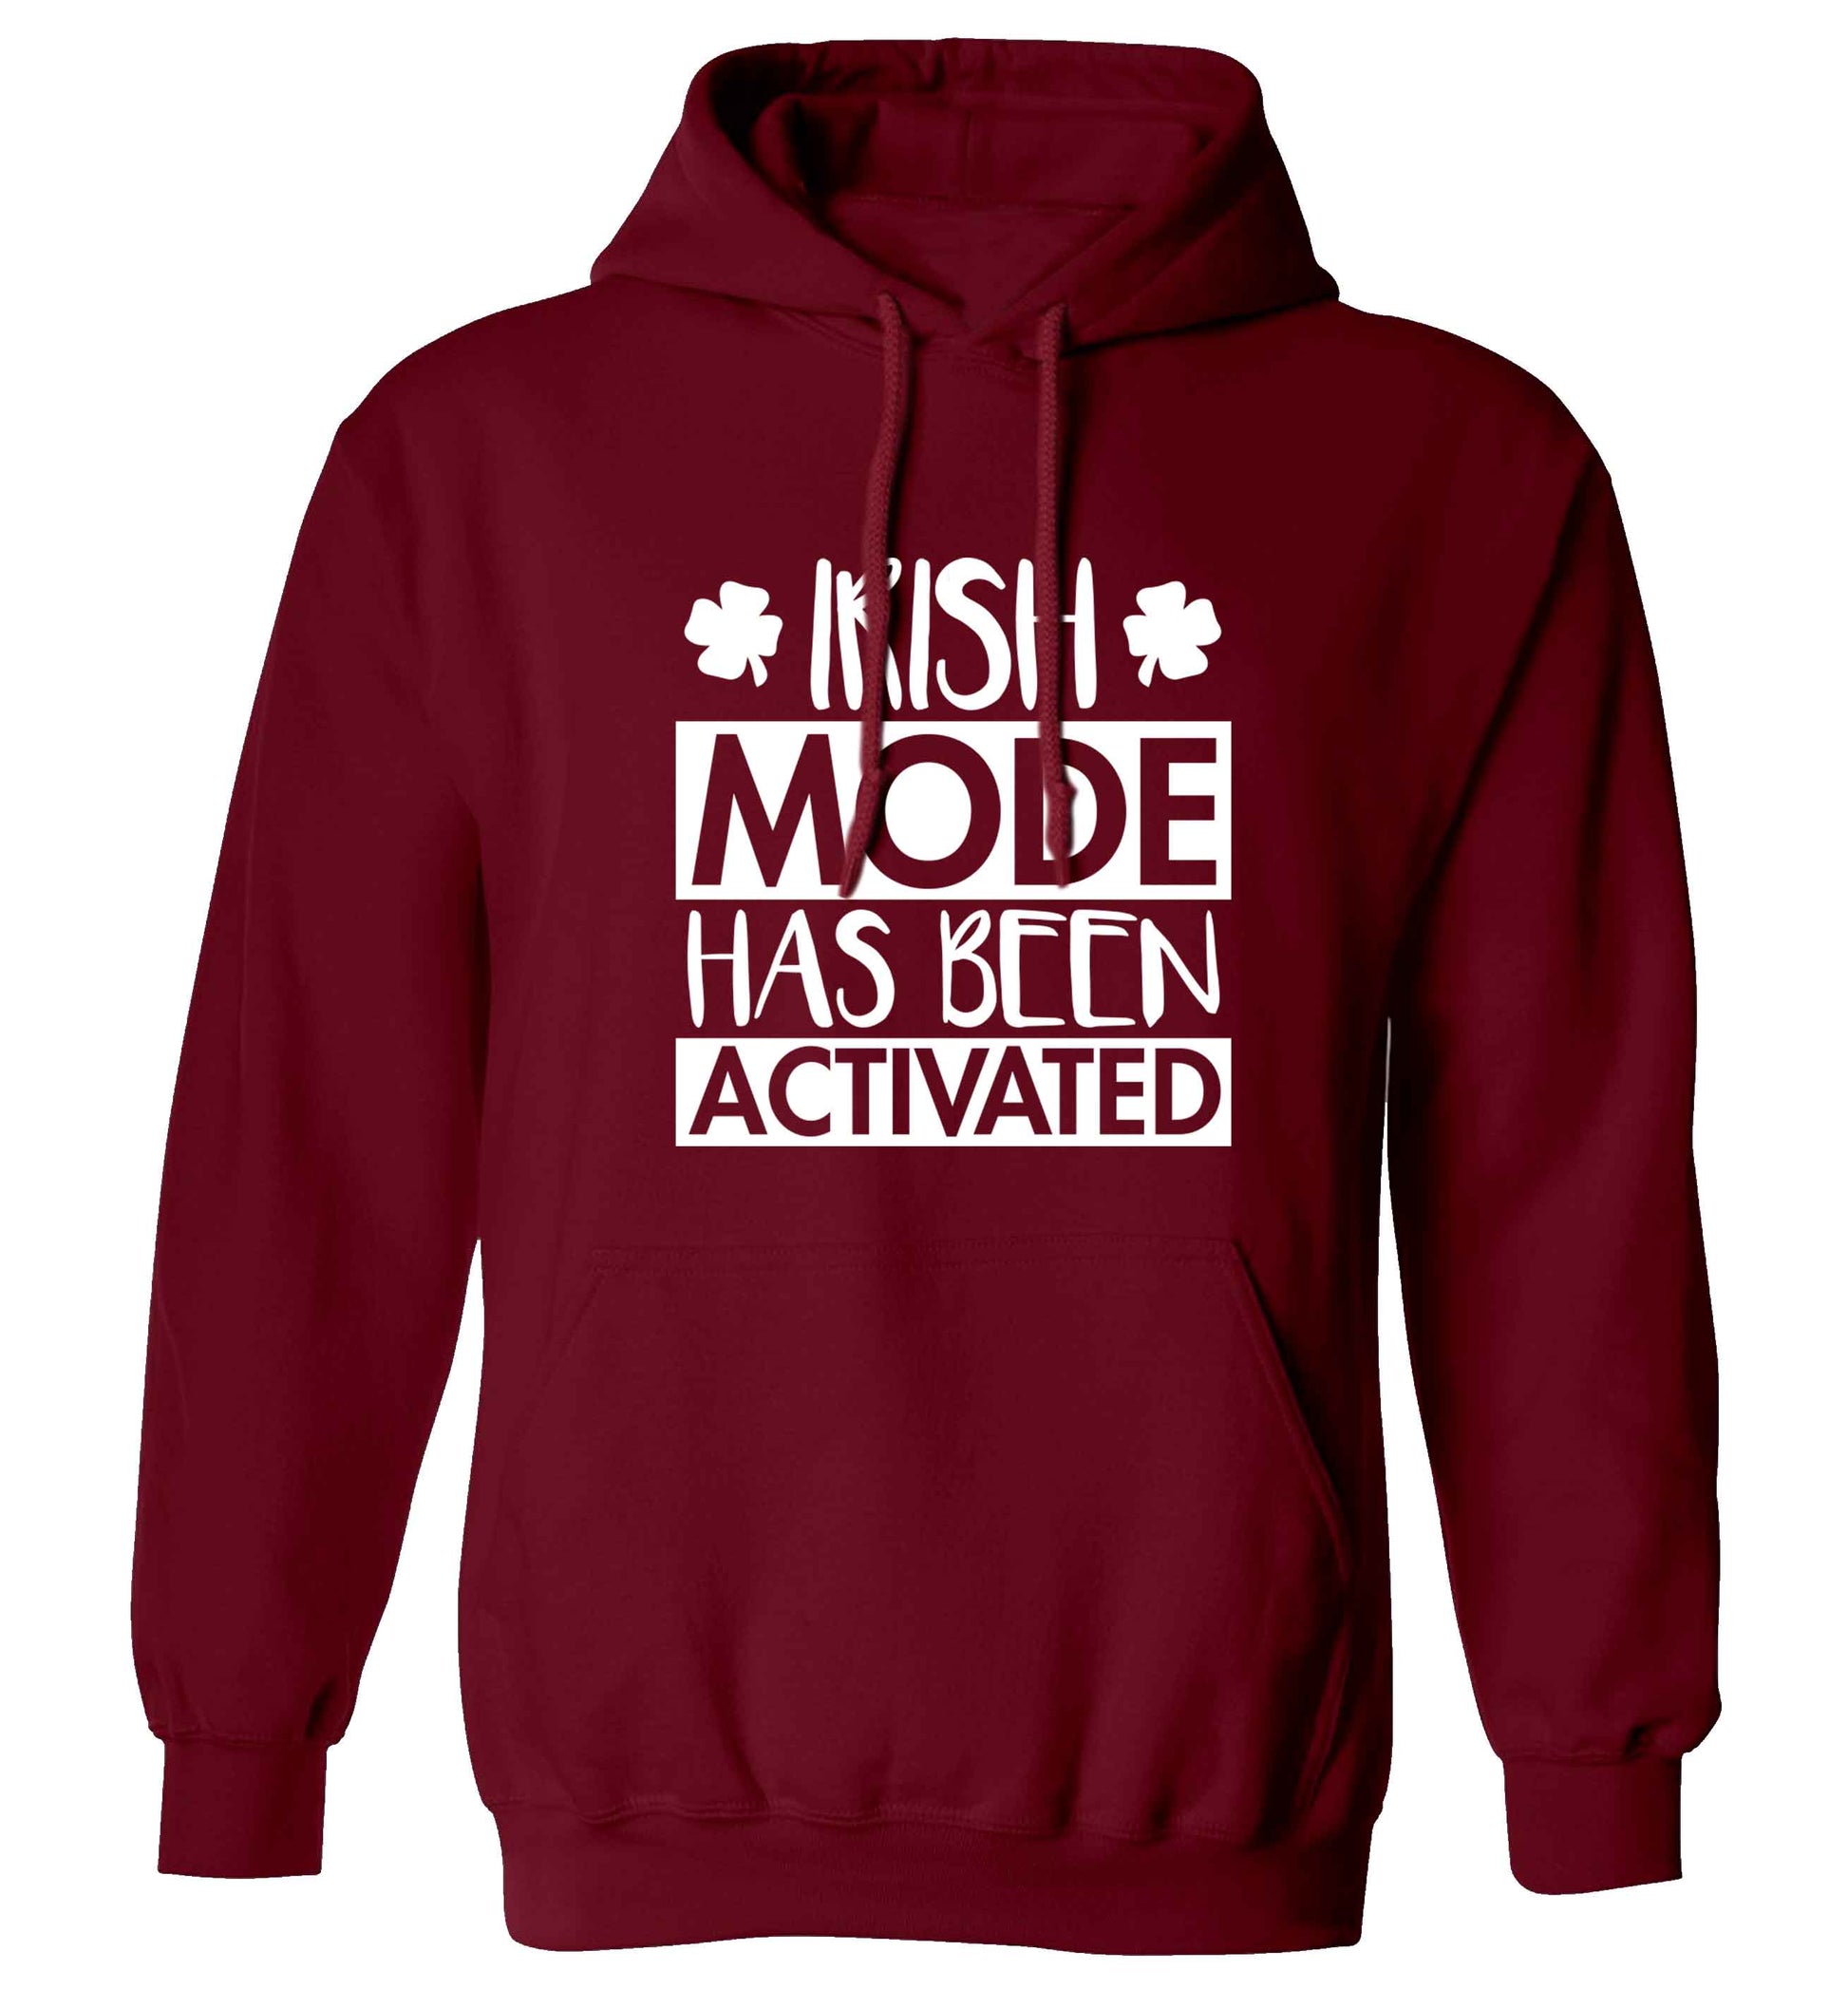 Irish mode has been activated adults unisex maroon hoodie 2XL